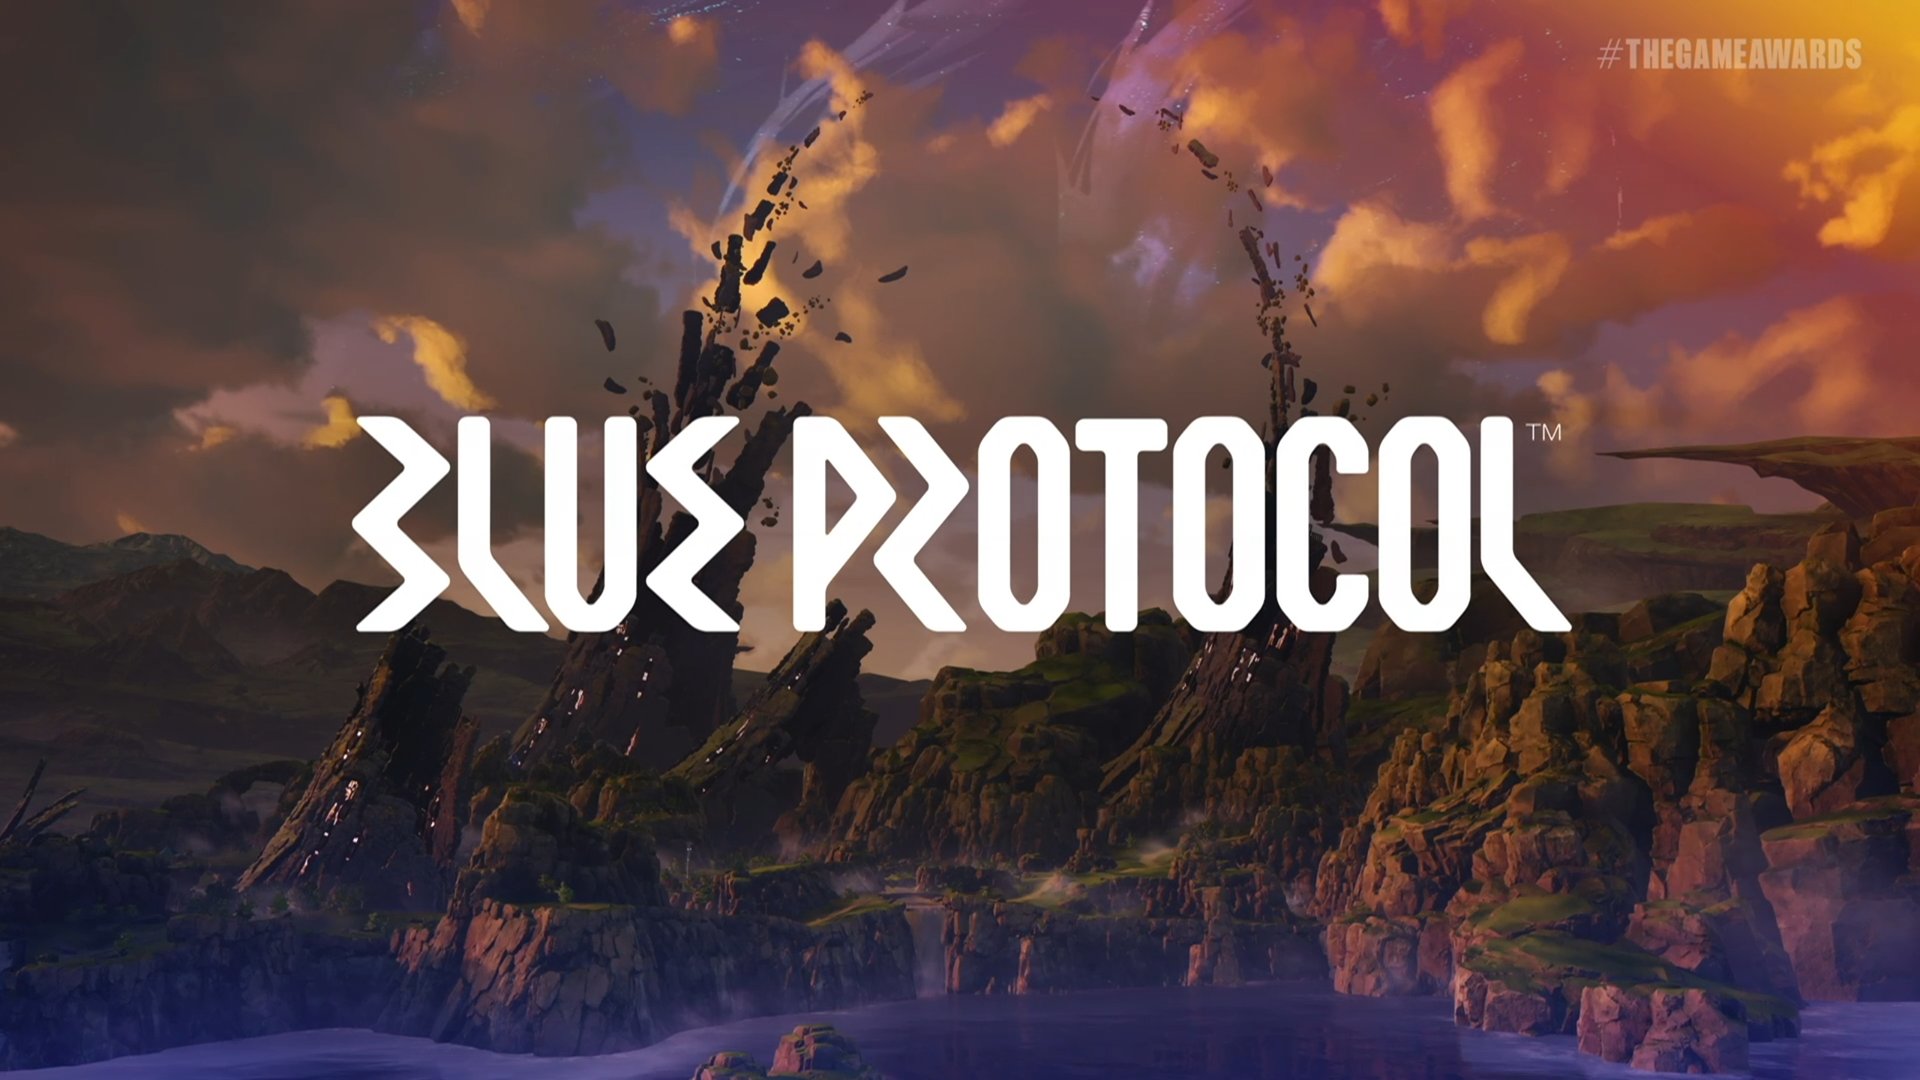 Blue Protocol - December 2022 Gameplay 